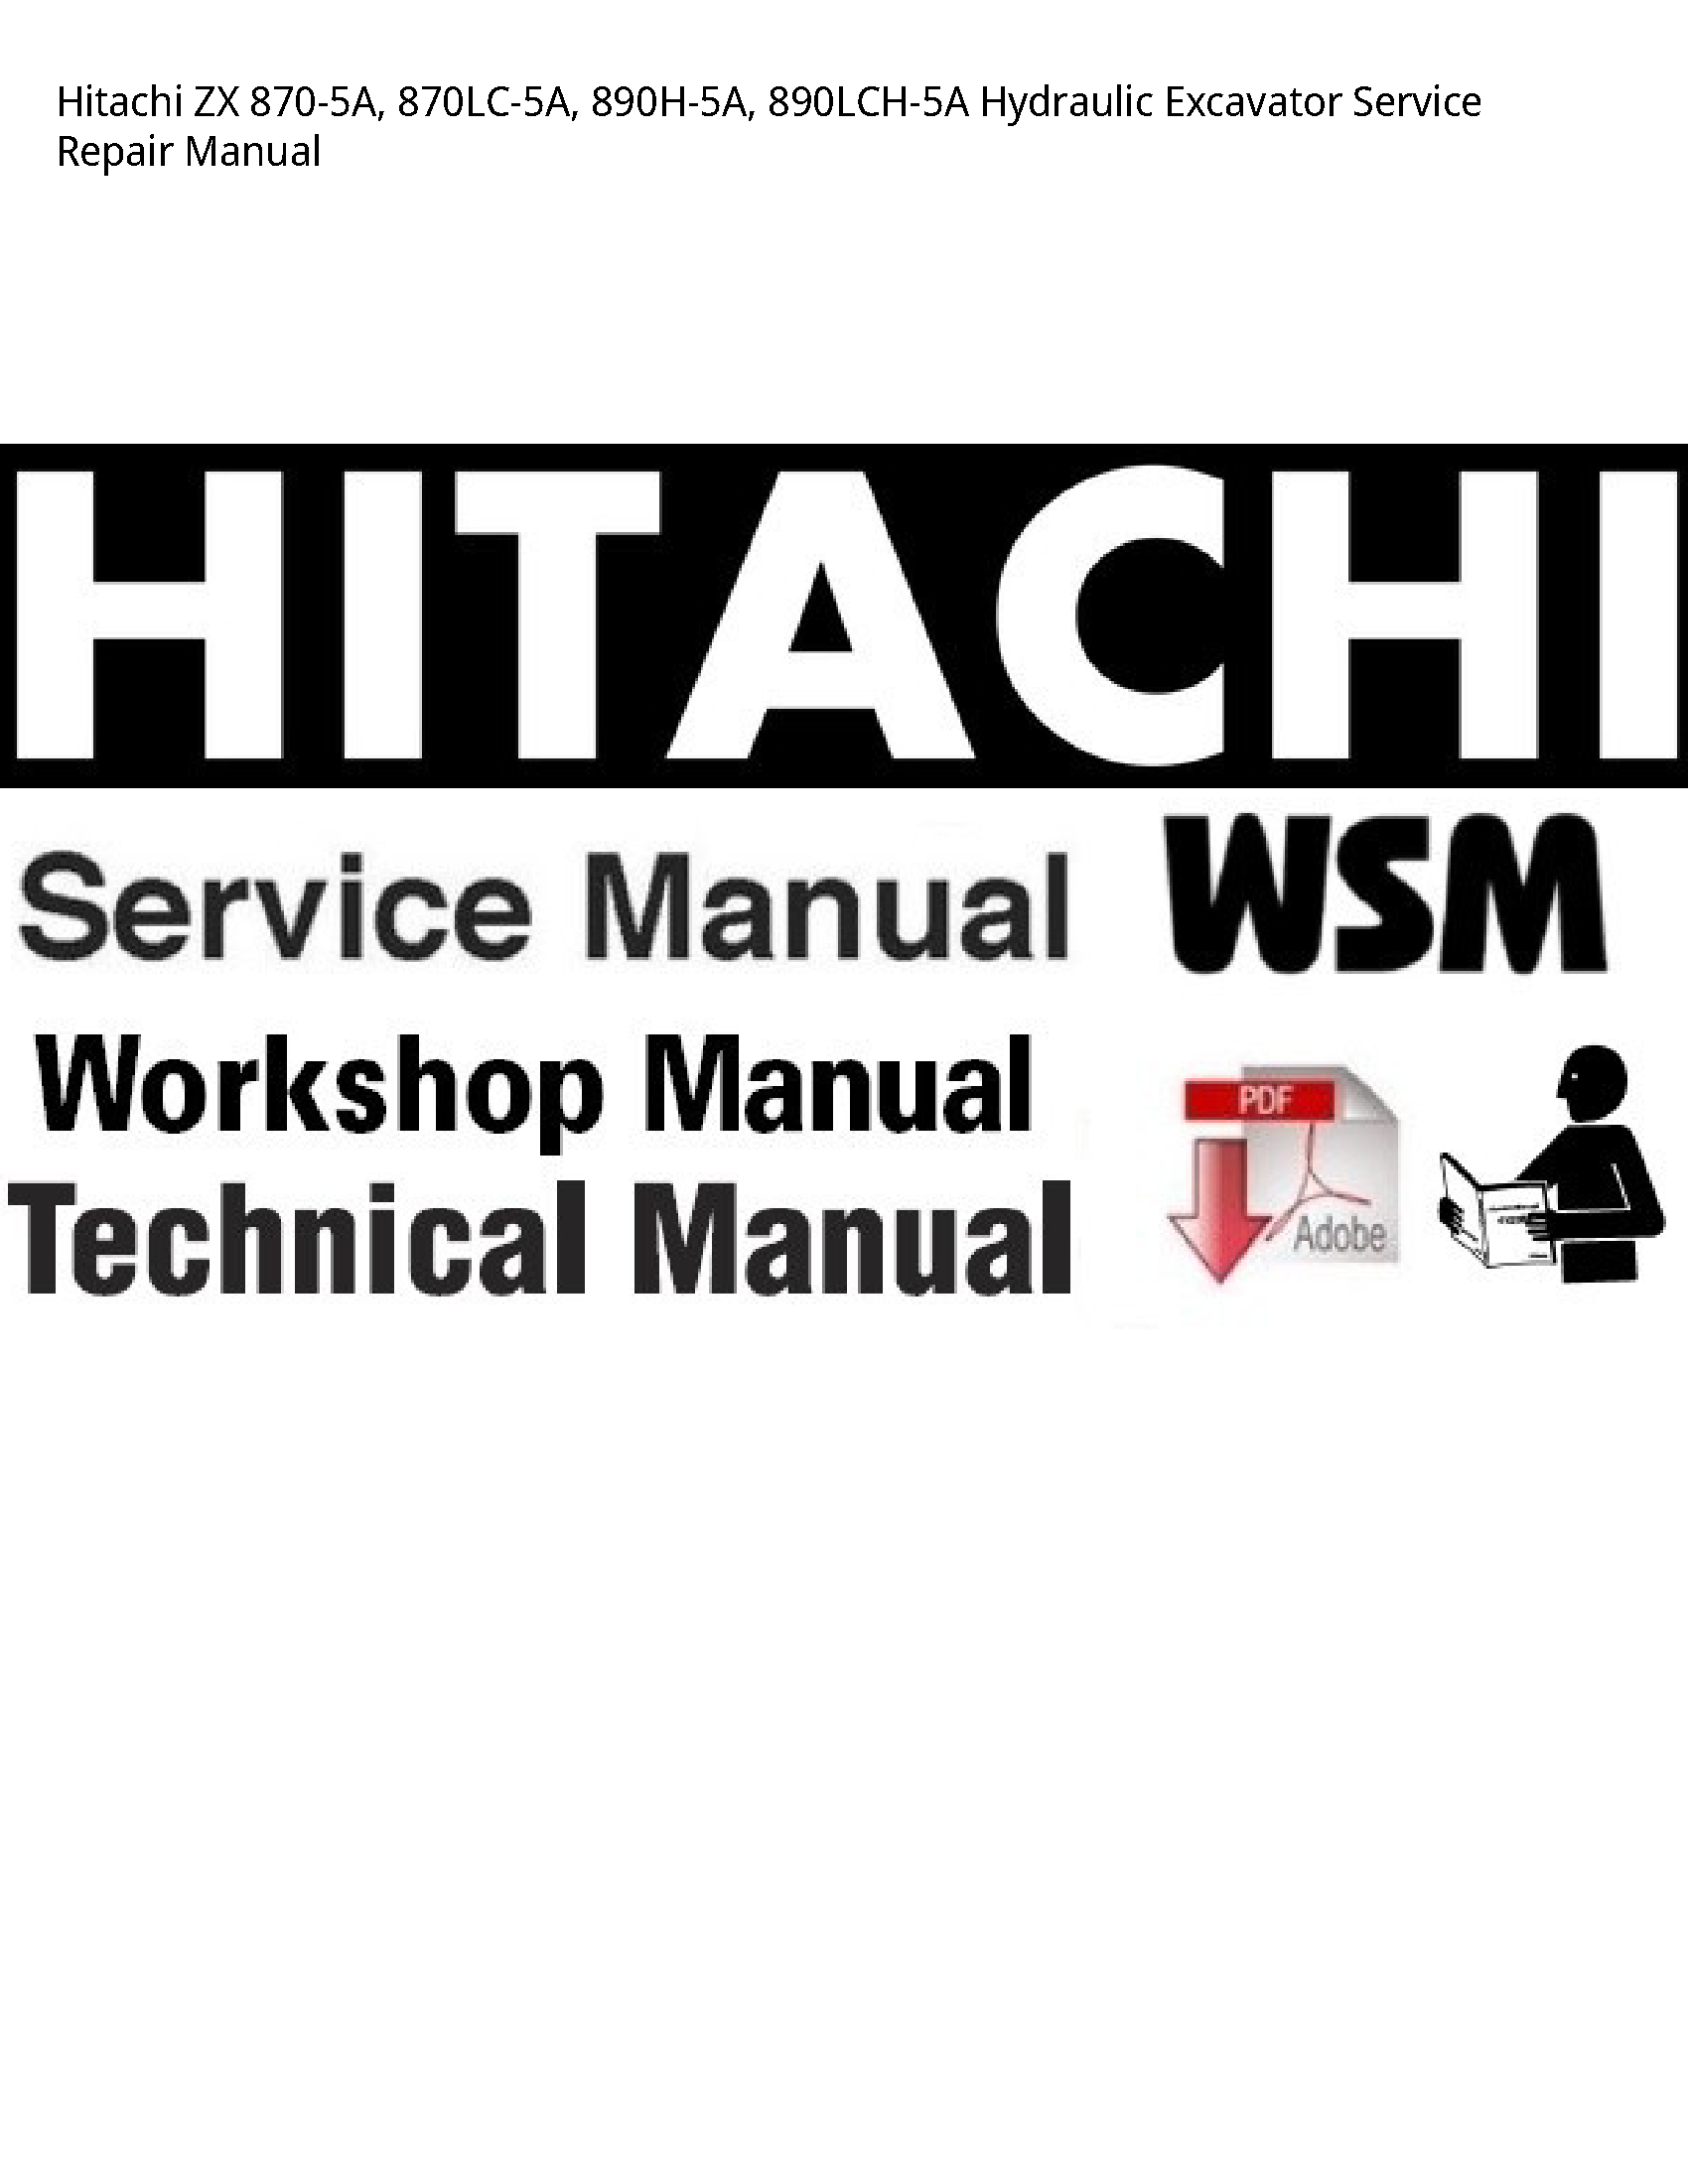 Hitachi 870-5A ZX Hydraulic Excavator manual